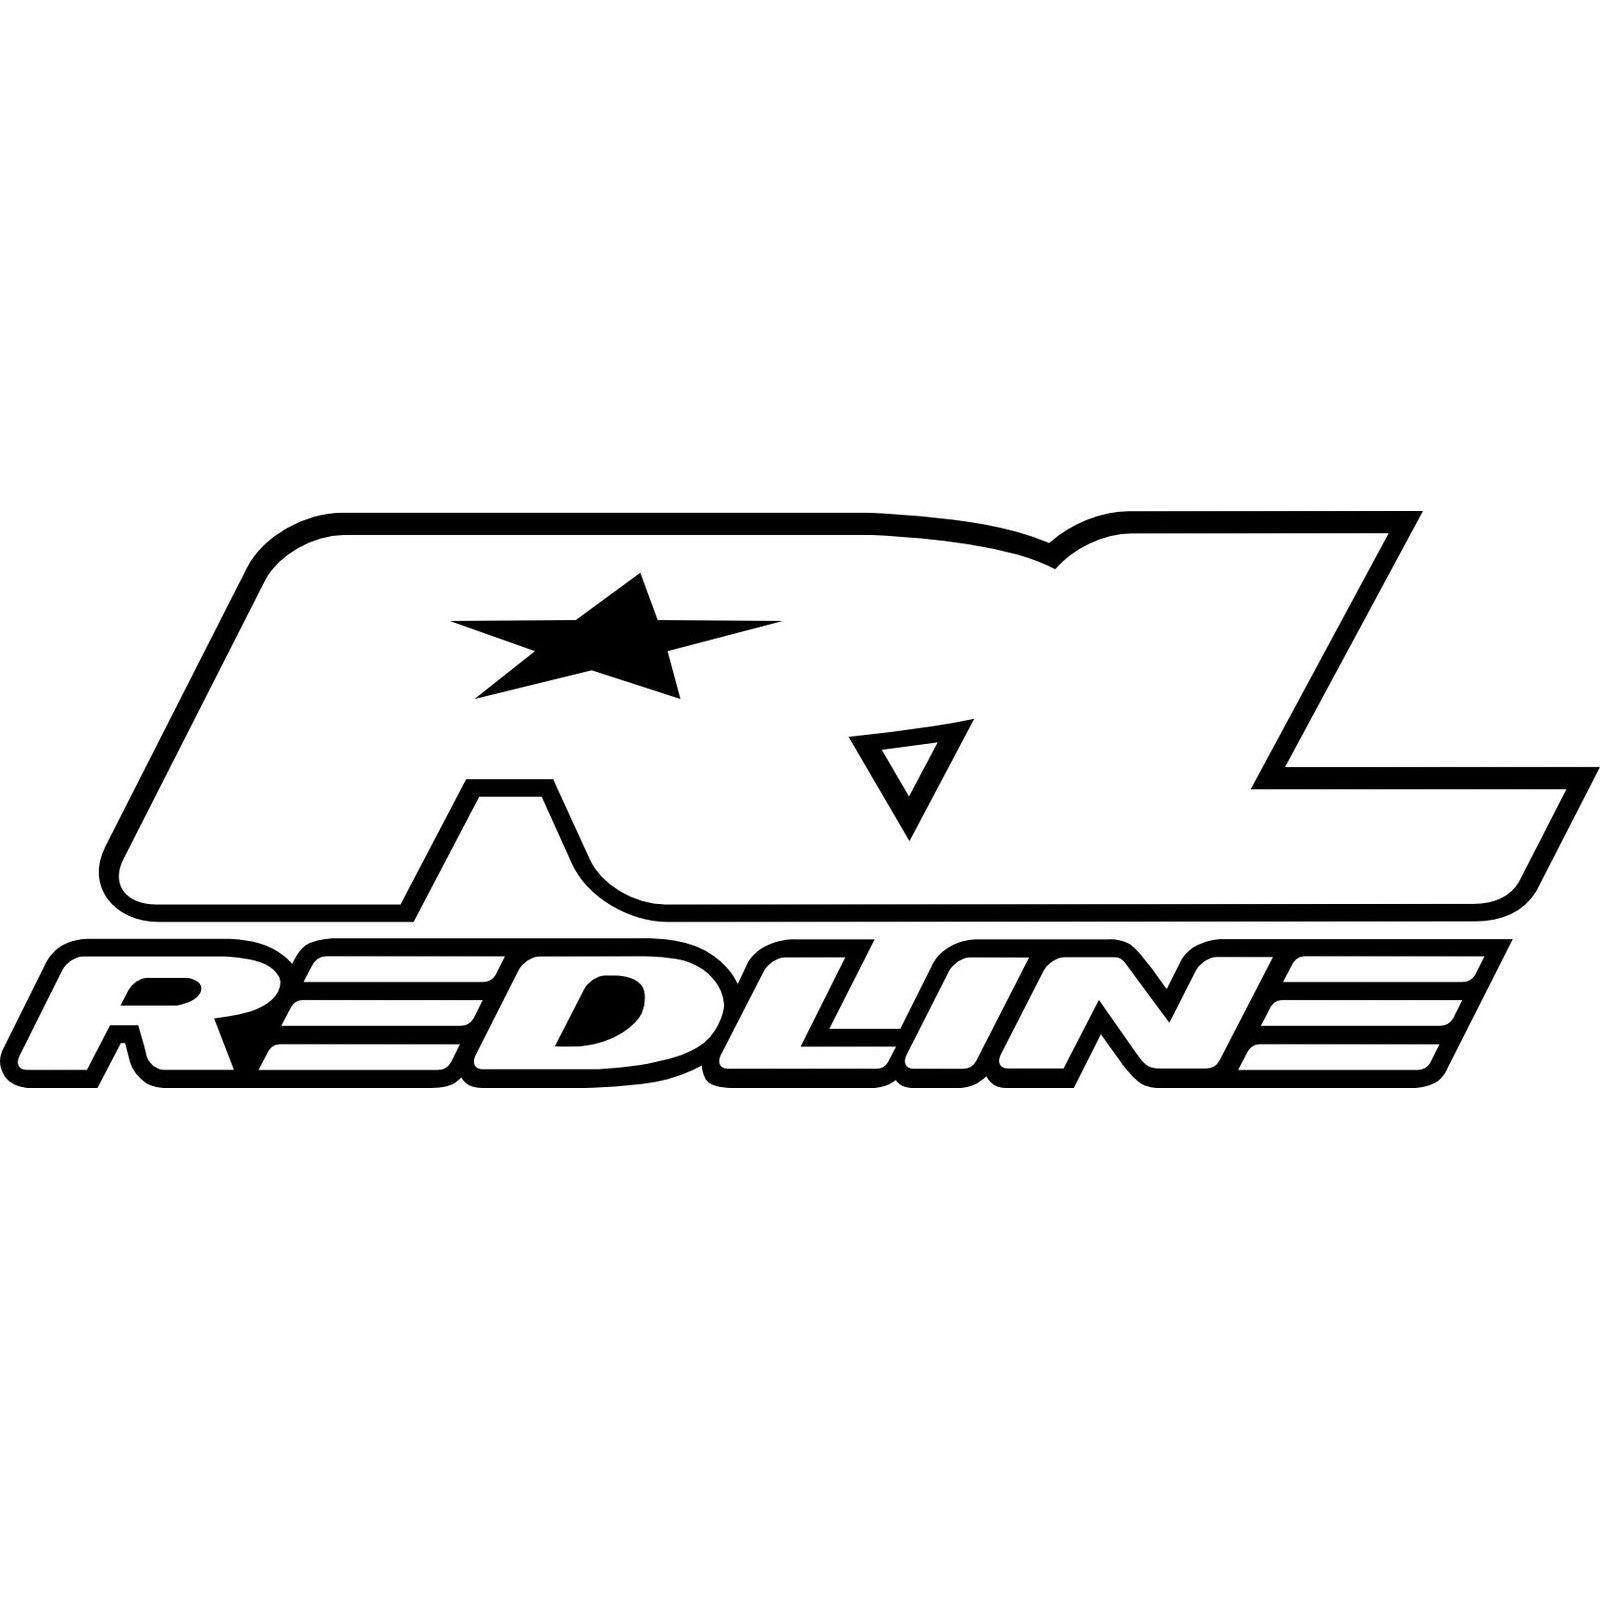 White with Red Line Logo - Redline Logo Car/Van/Window Decal